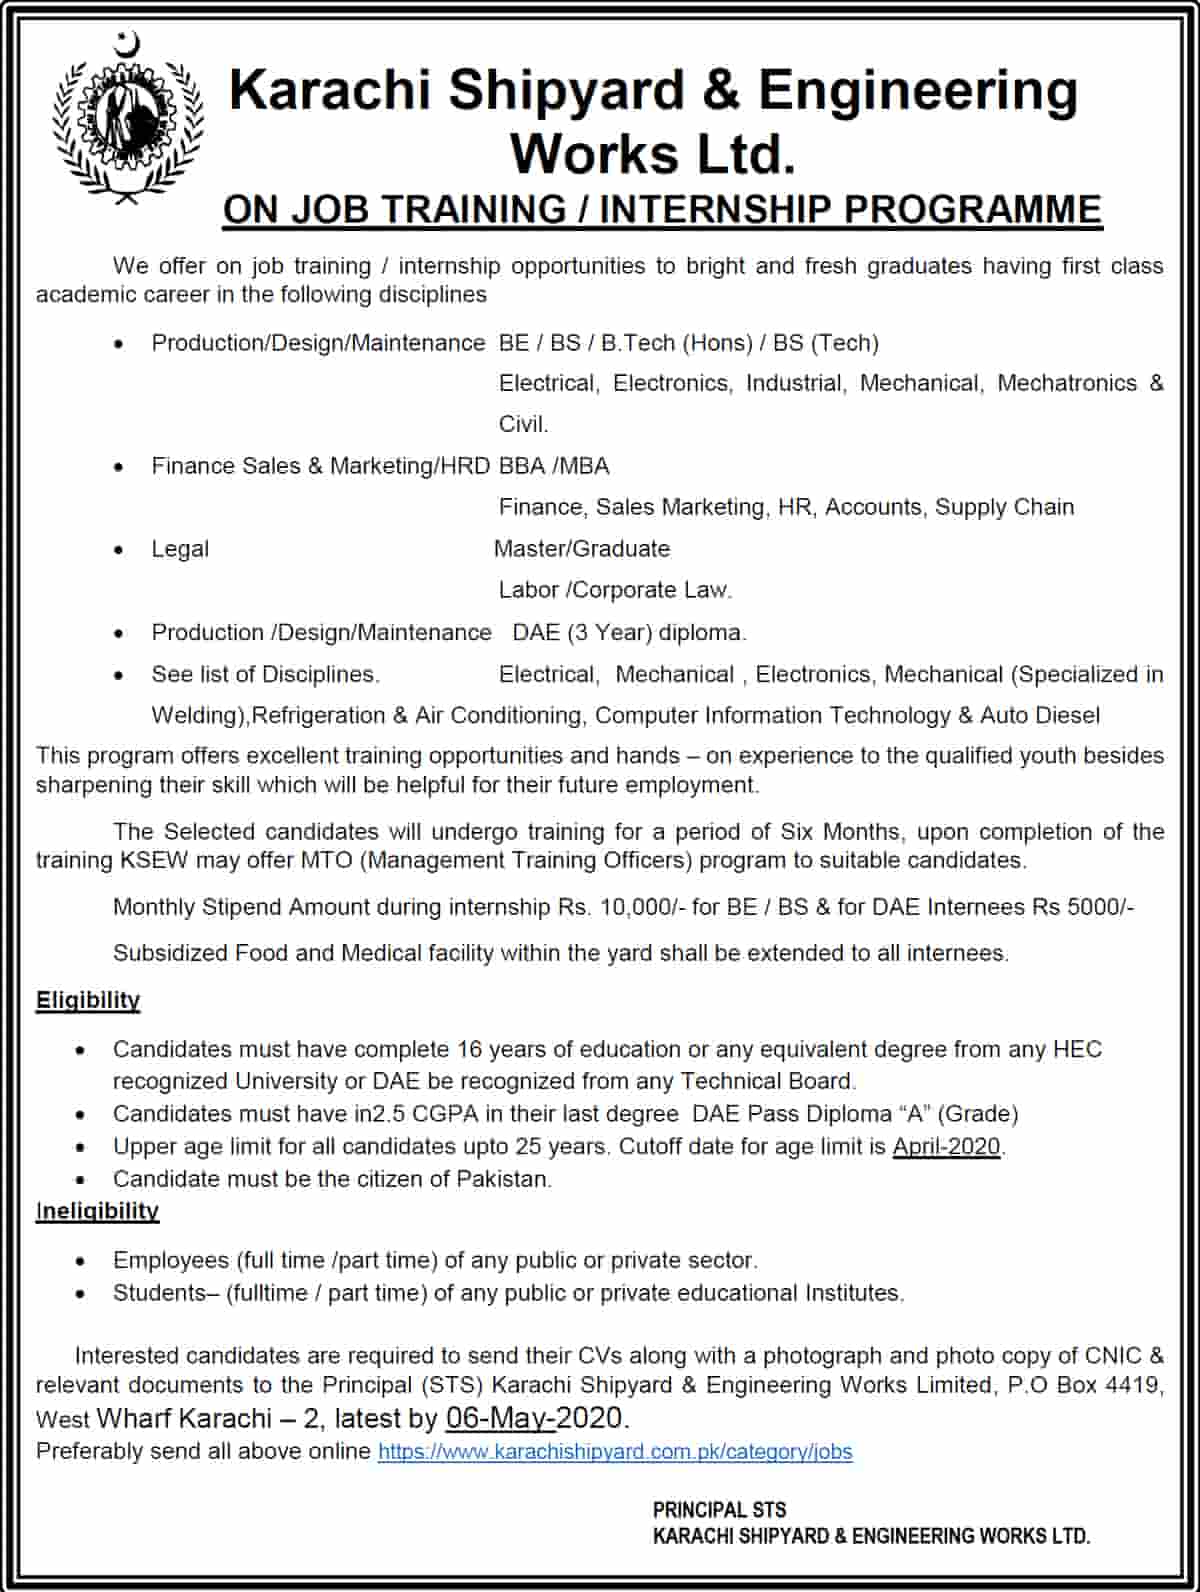 Karachi Shipyard and Engineering Works KSEW Limited Job Training Internship Programme 2020